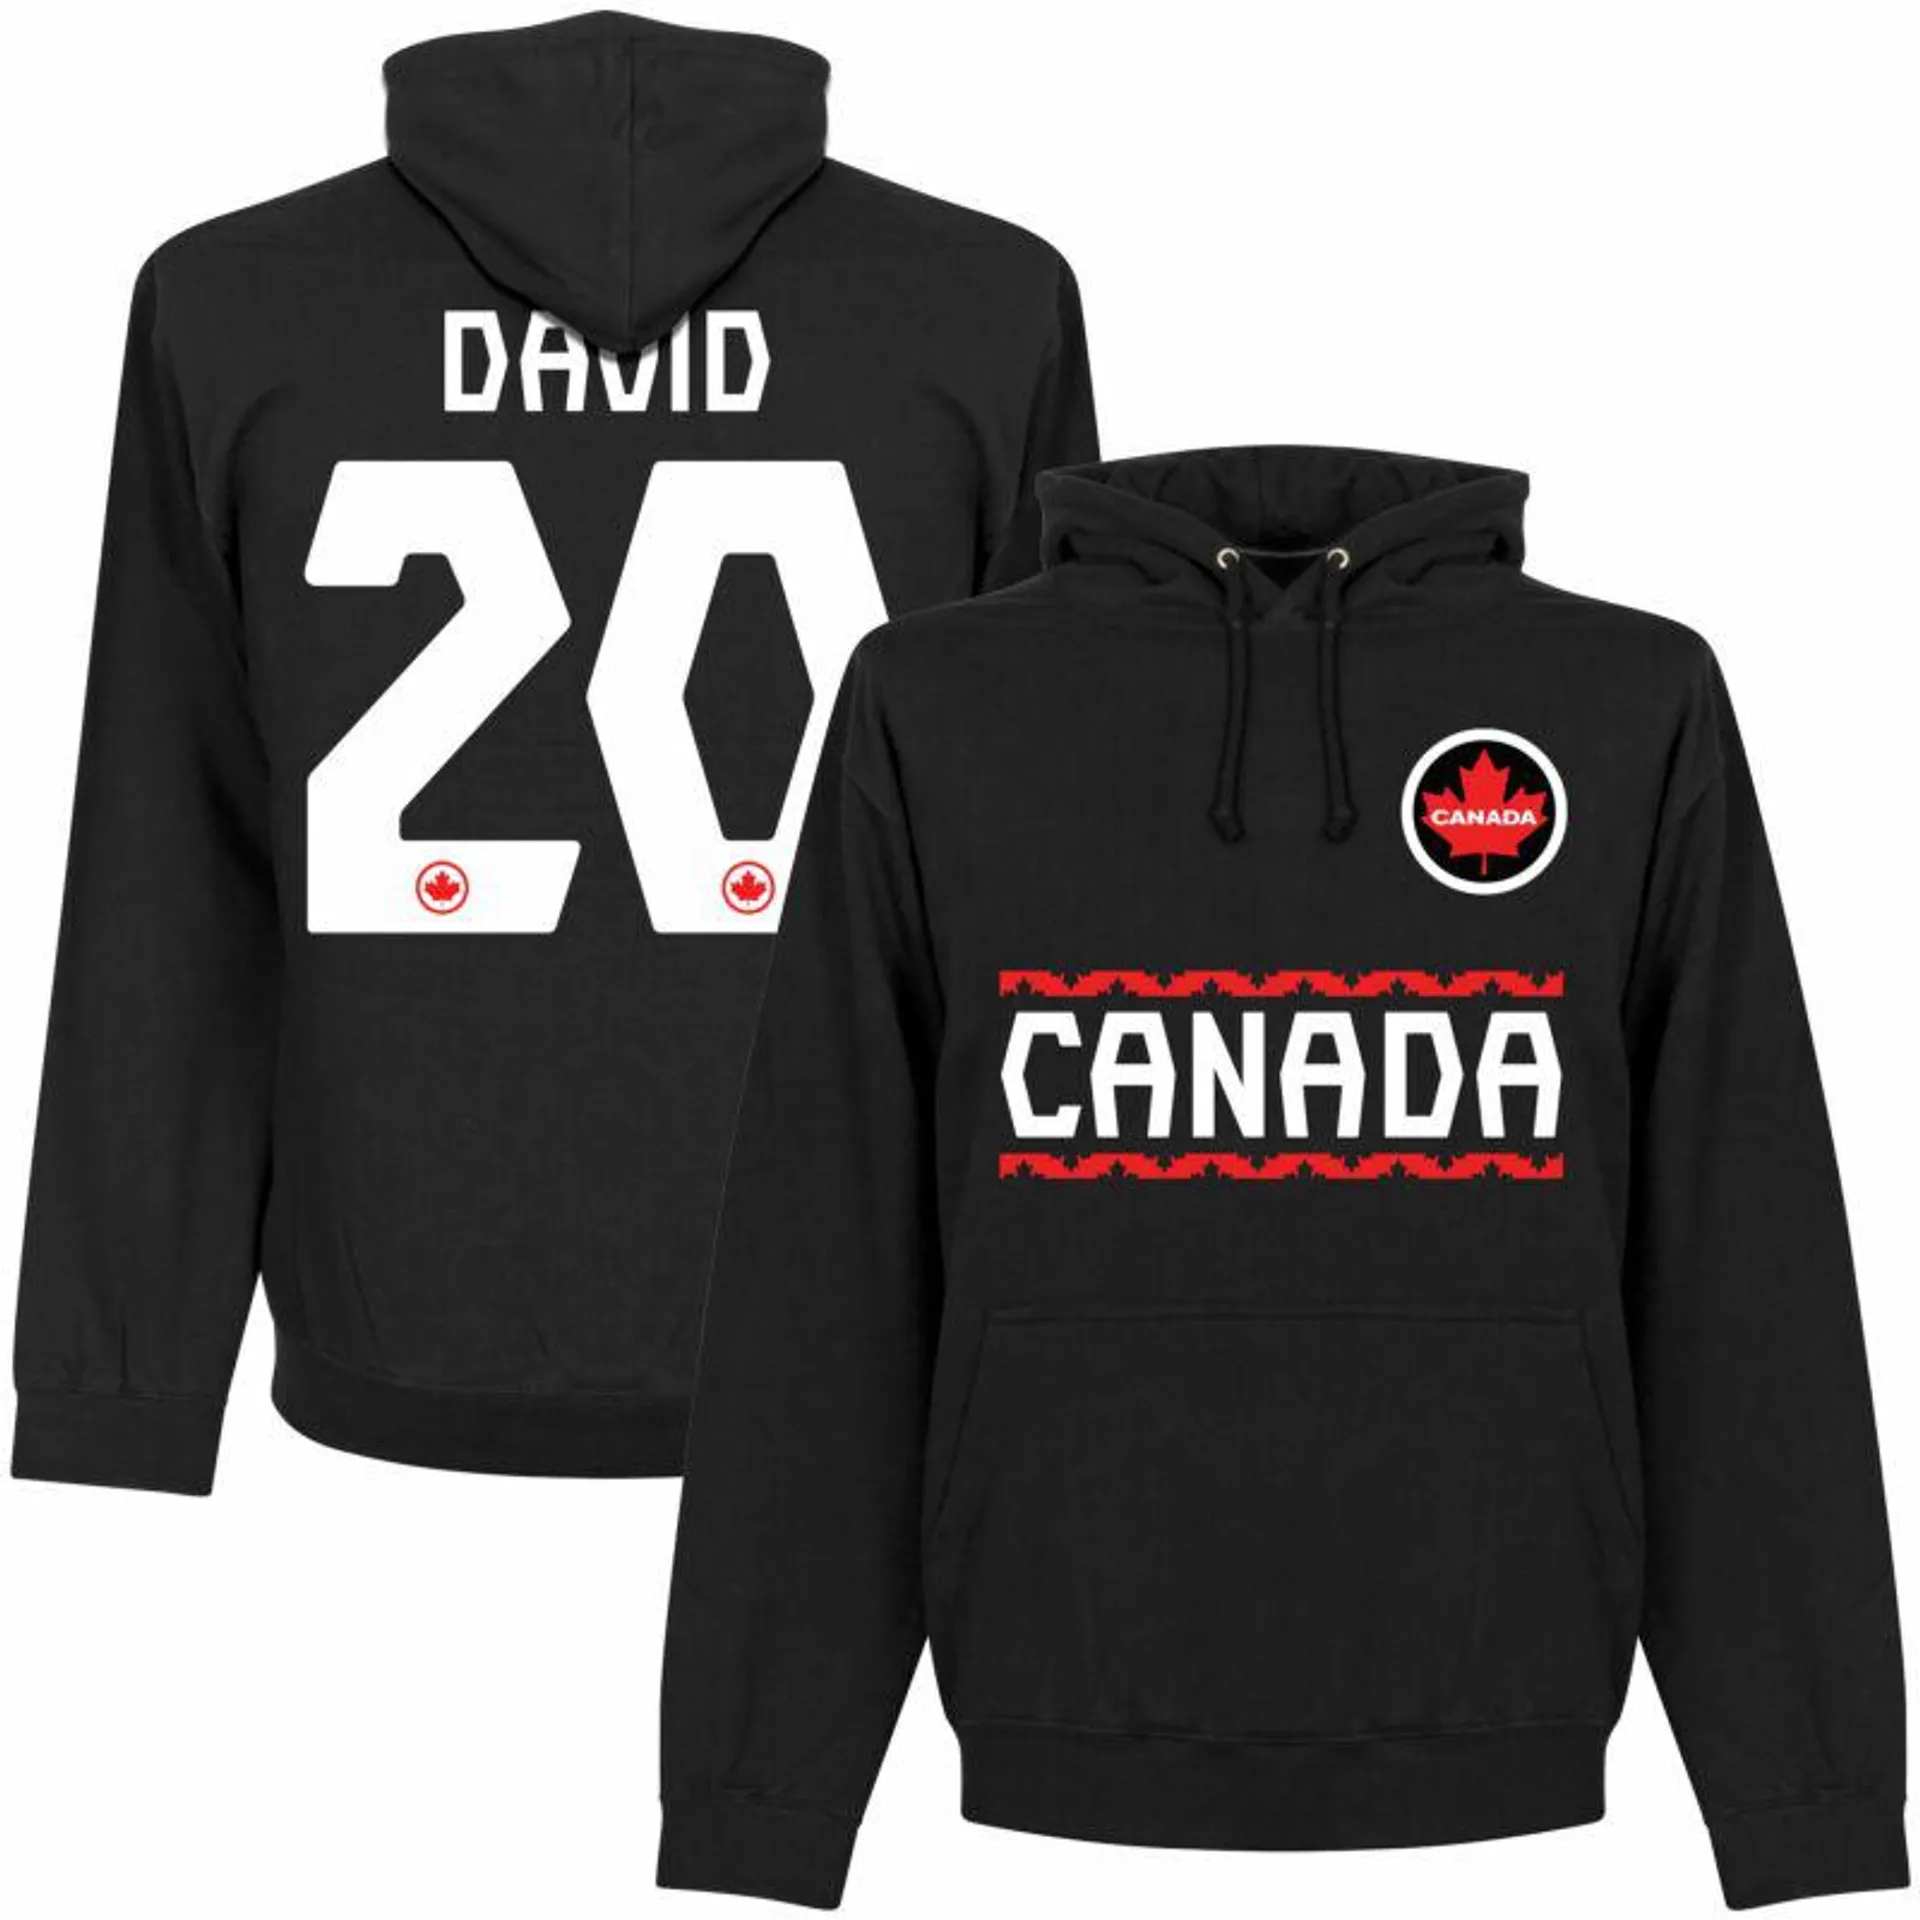 Canada Team David 20 Hoodie - Black